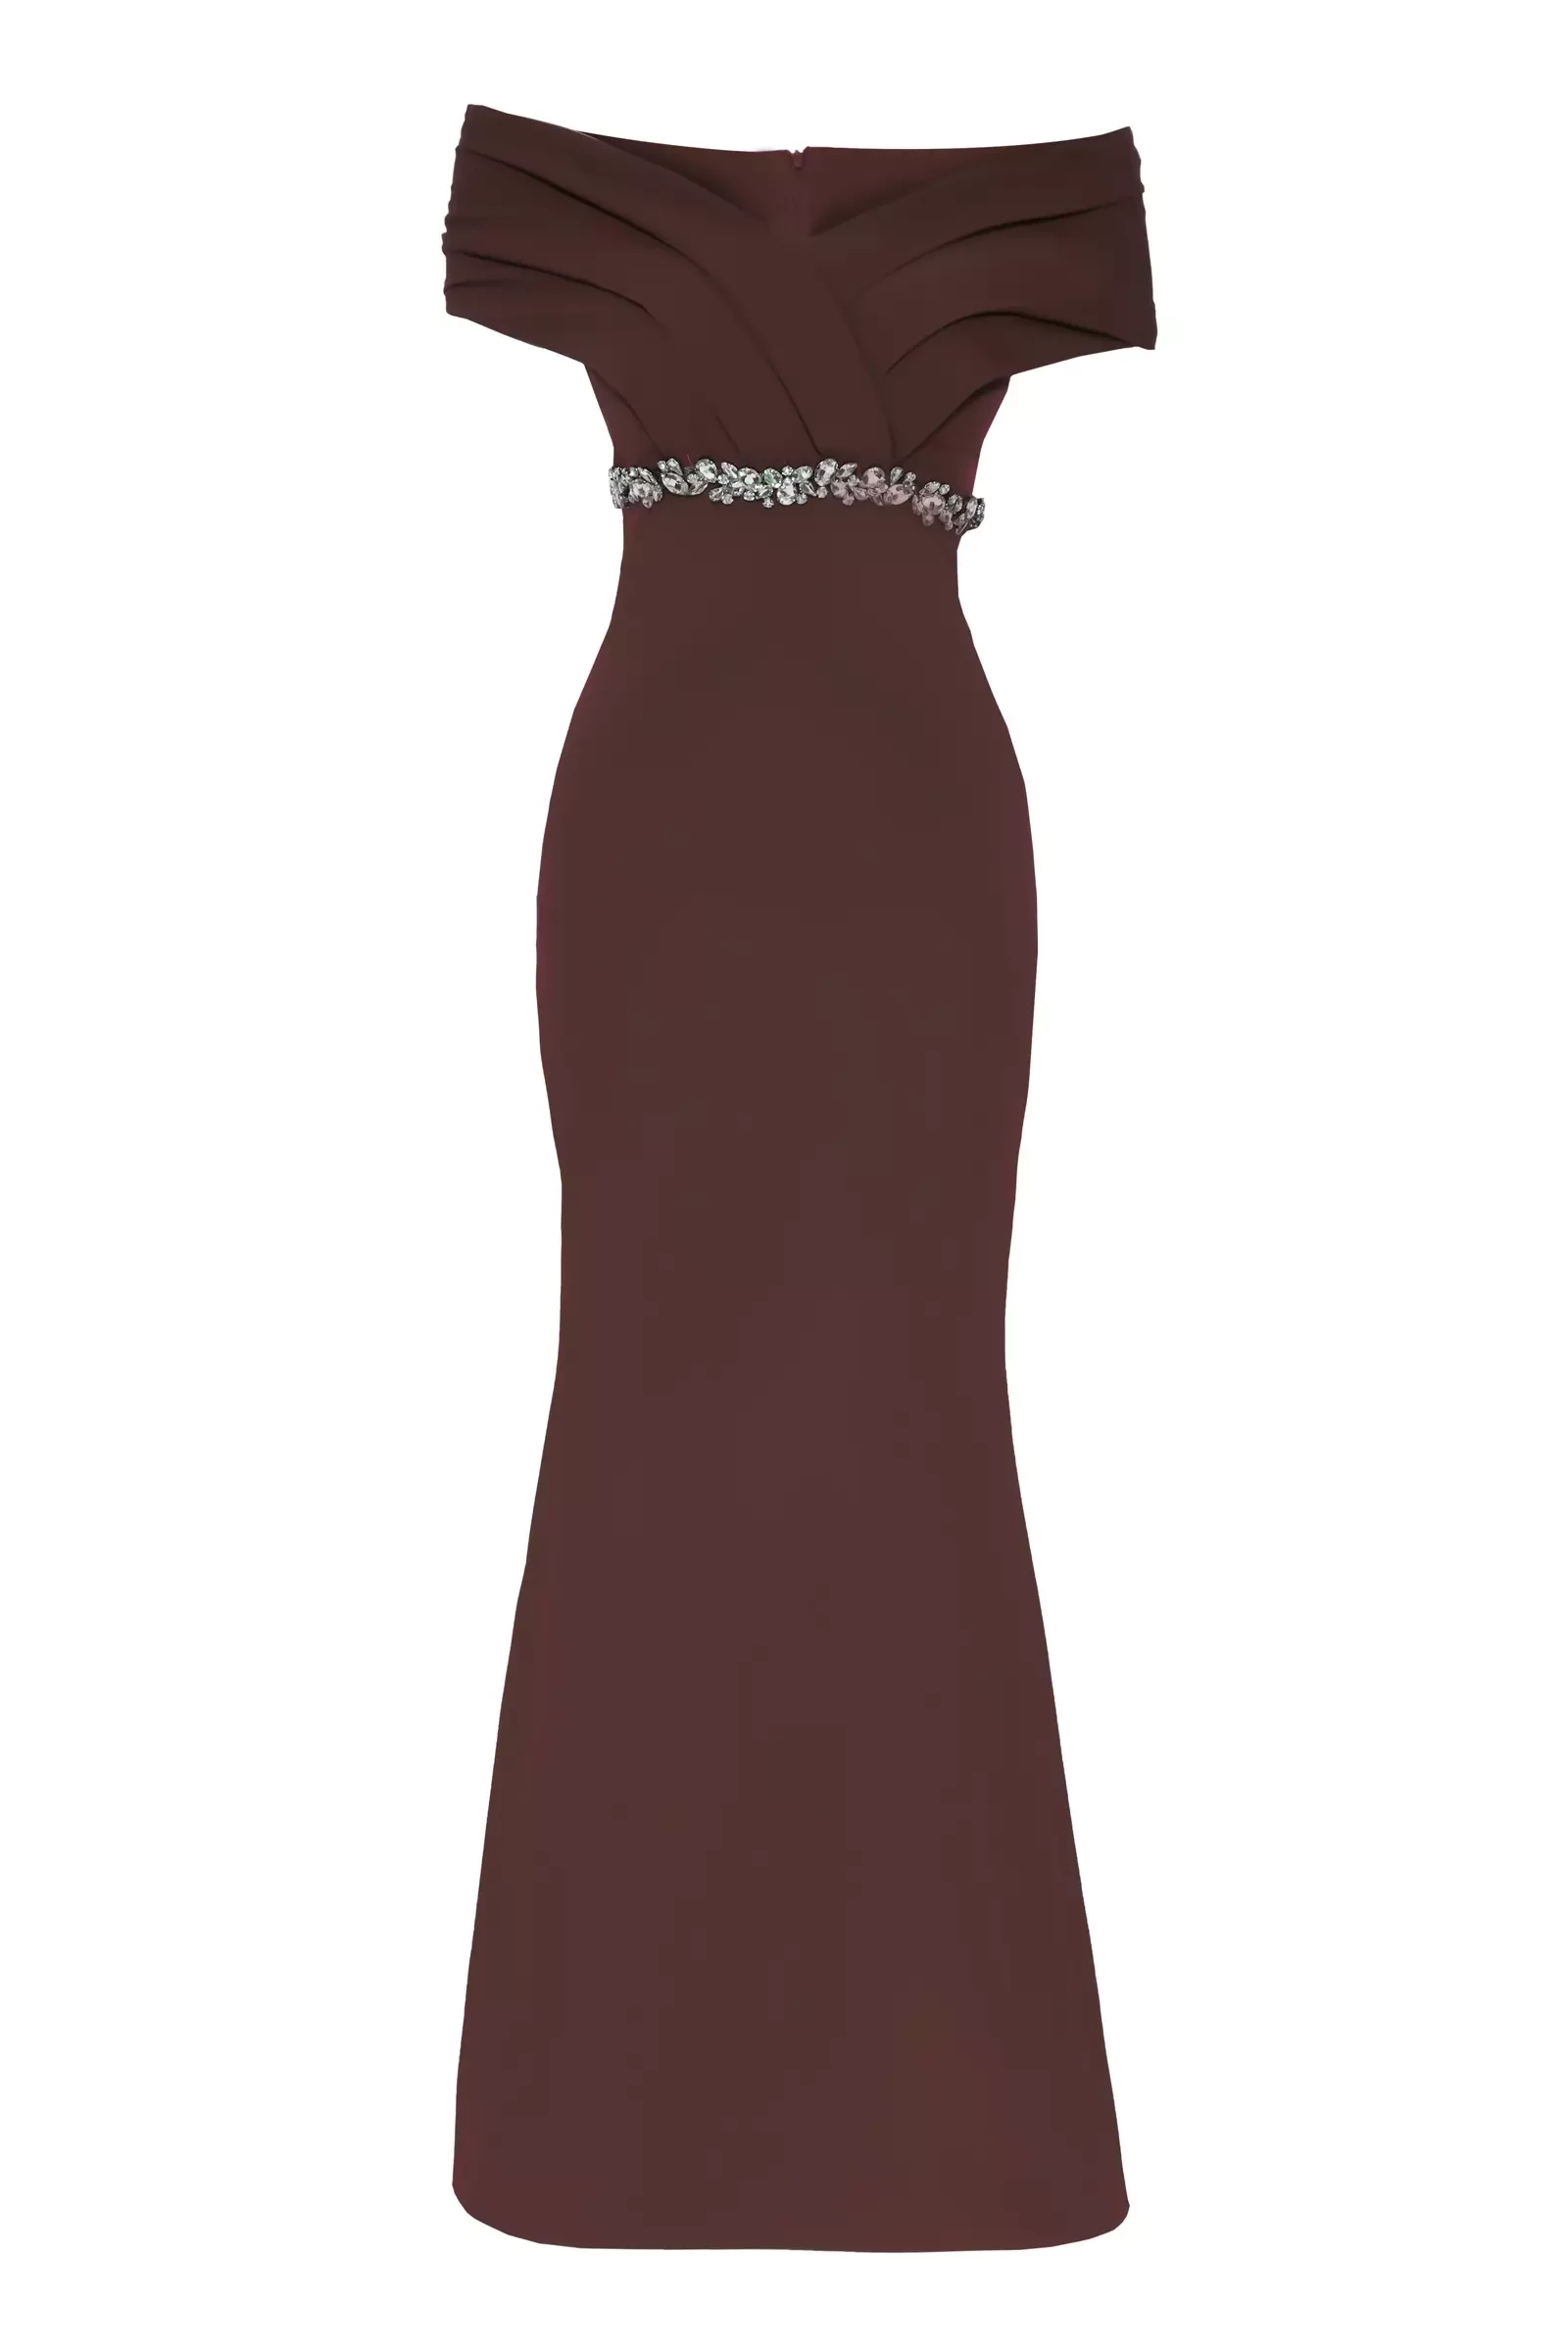 Brown crepe sleeveless long dress